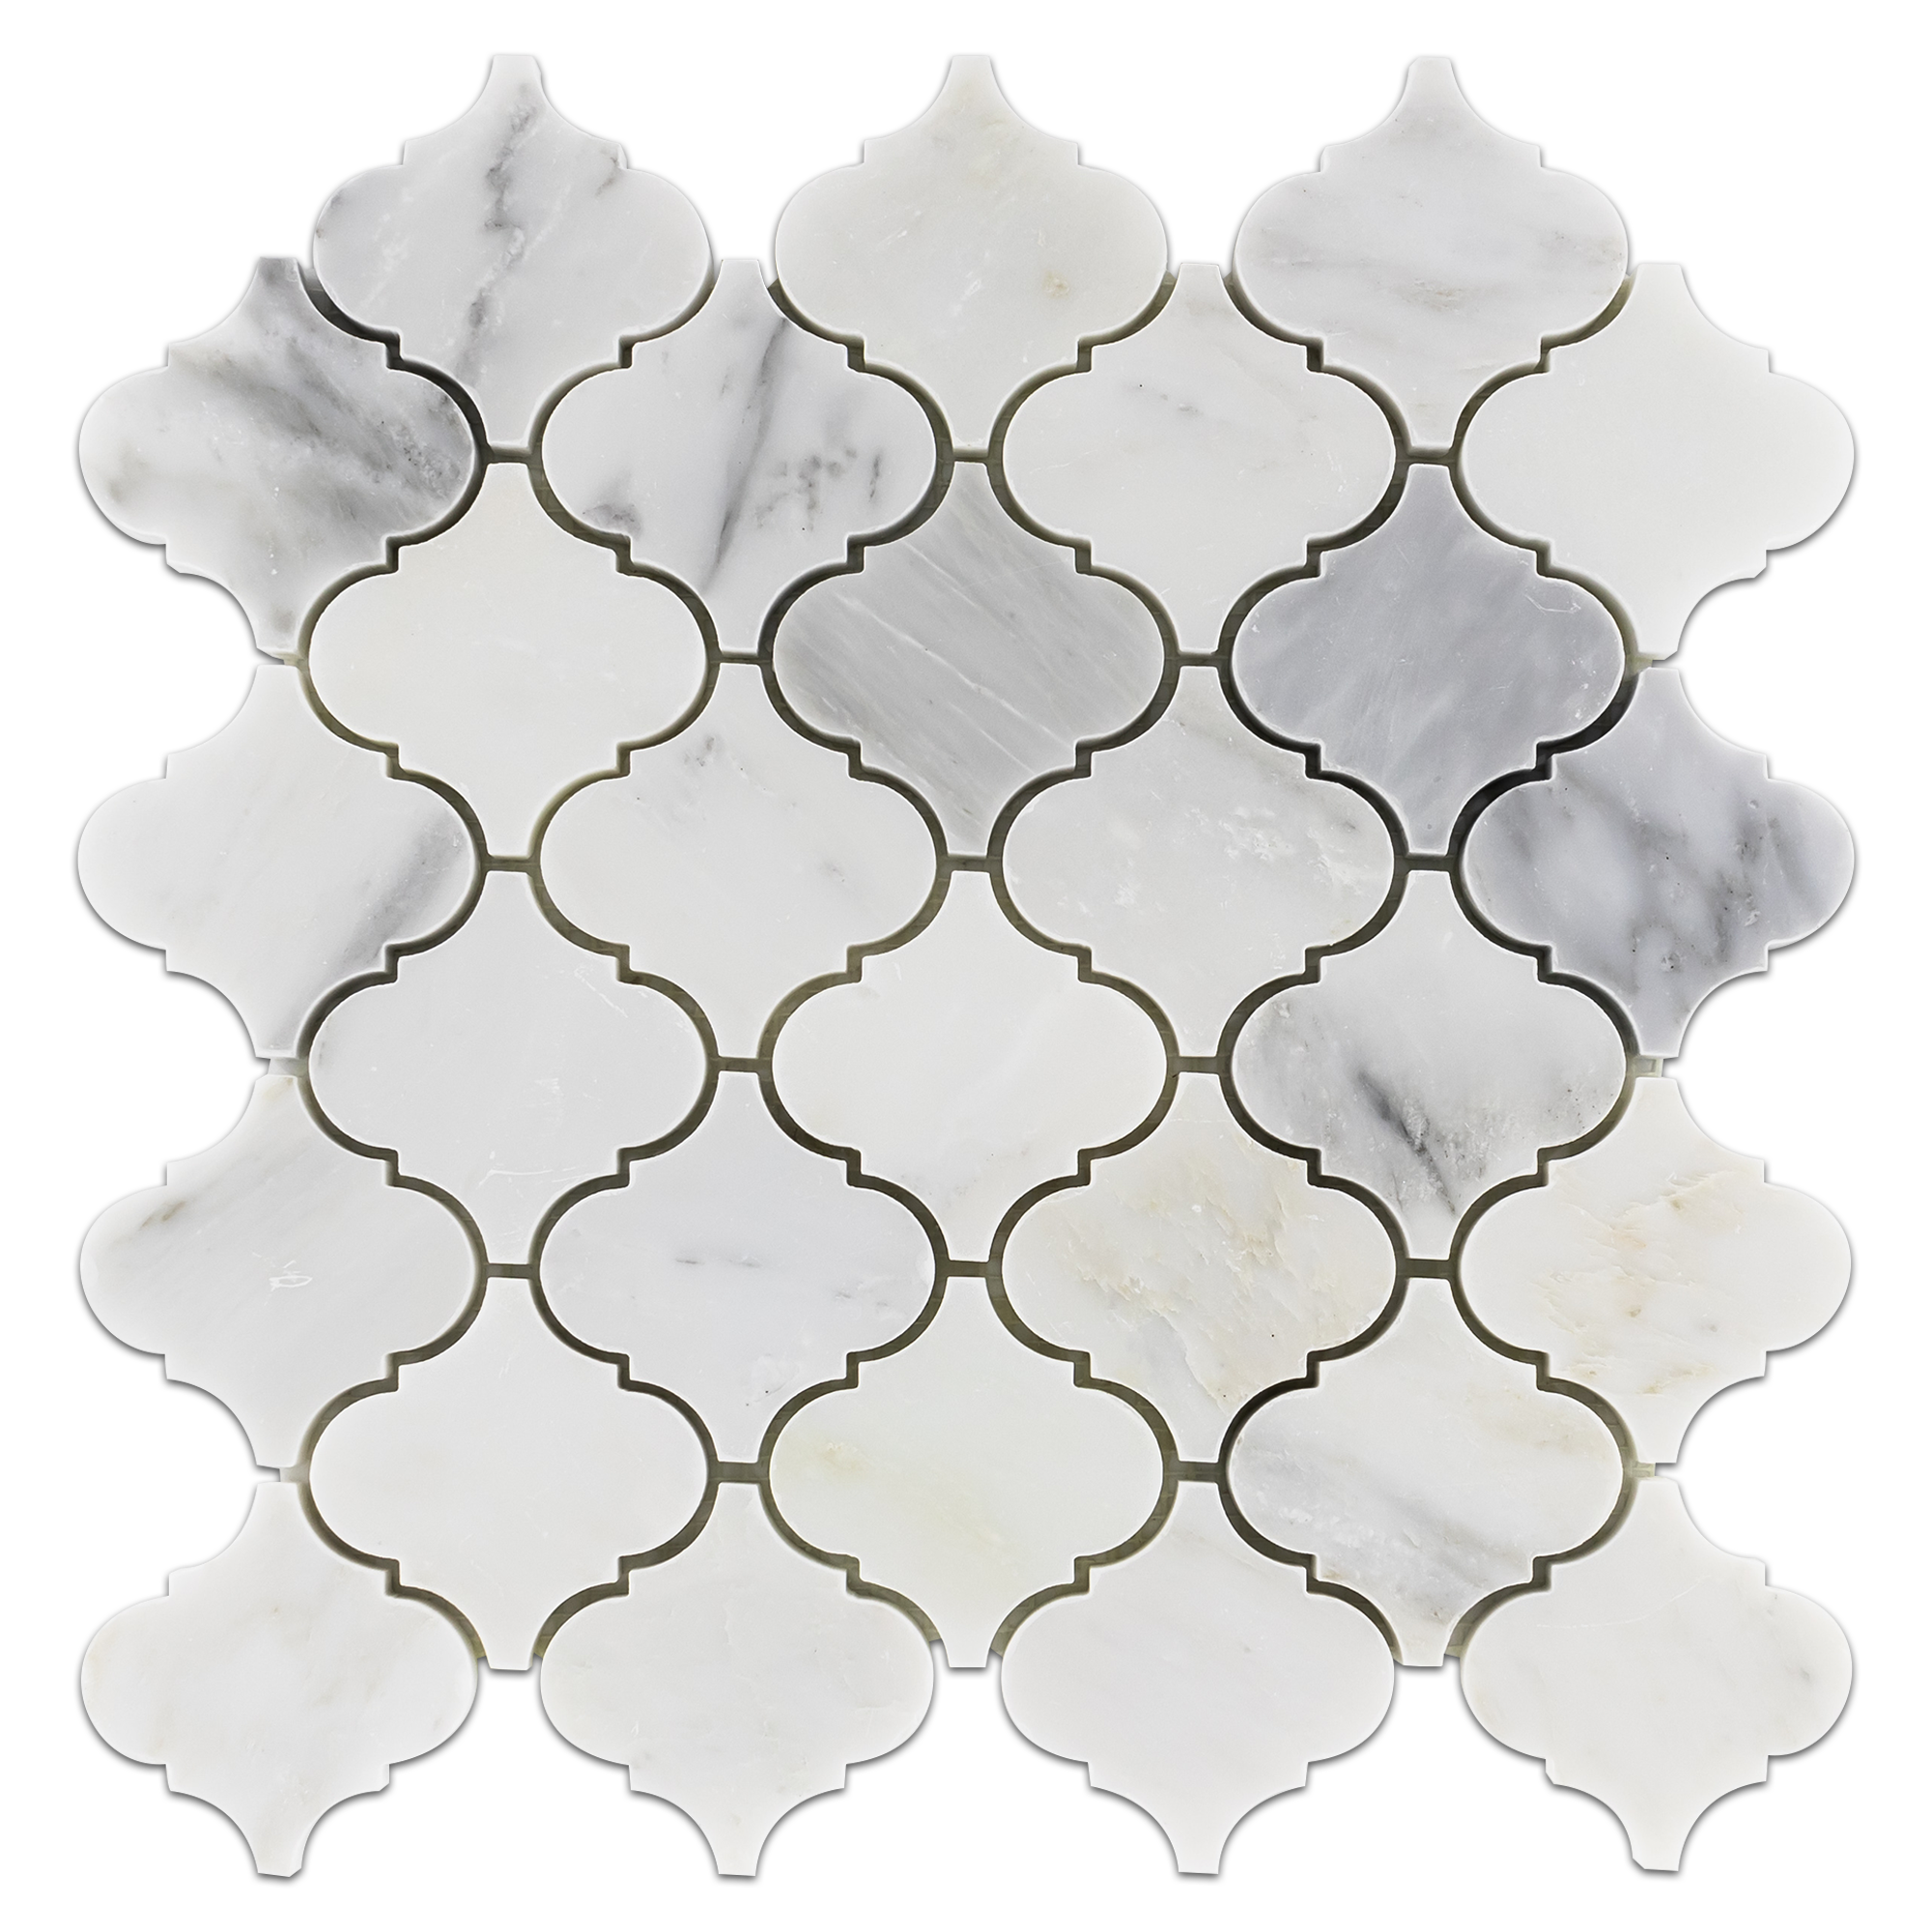 Elon Pearl White Marble 3 Lantern Field Mosaic 12x12 Tile - Polished Finish - Surface Group International